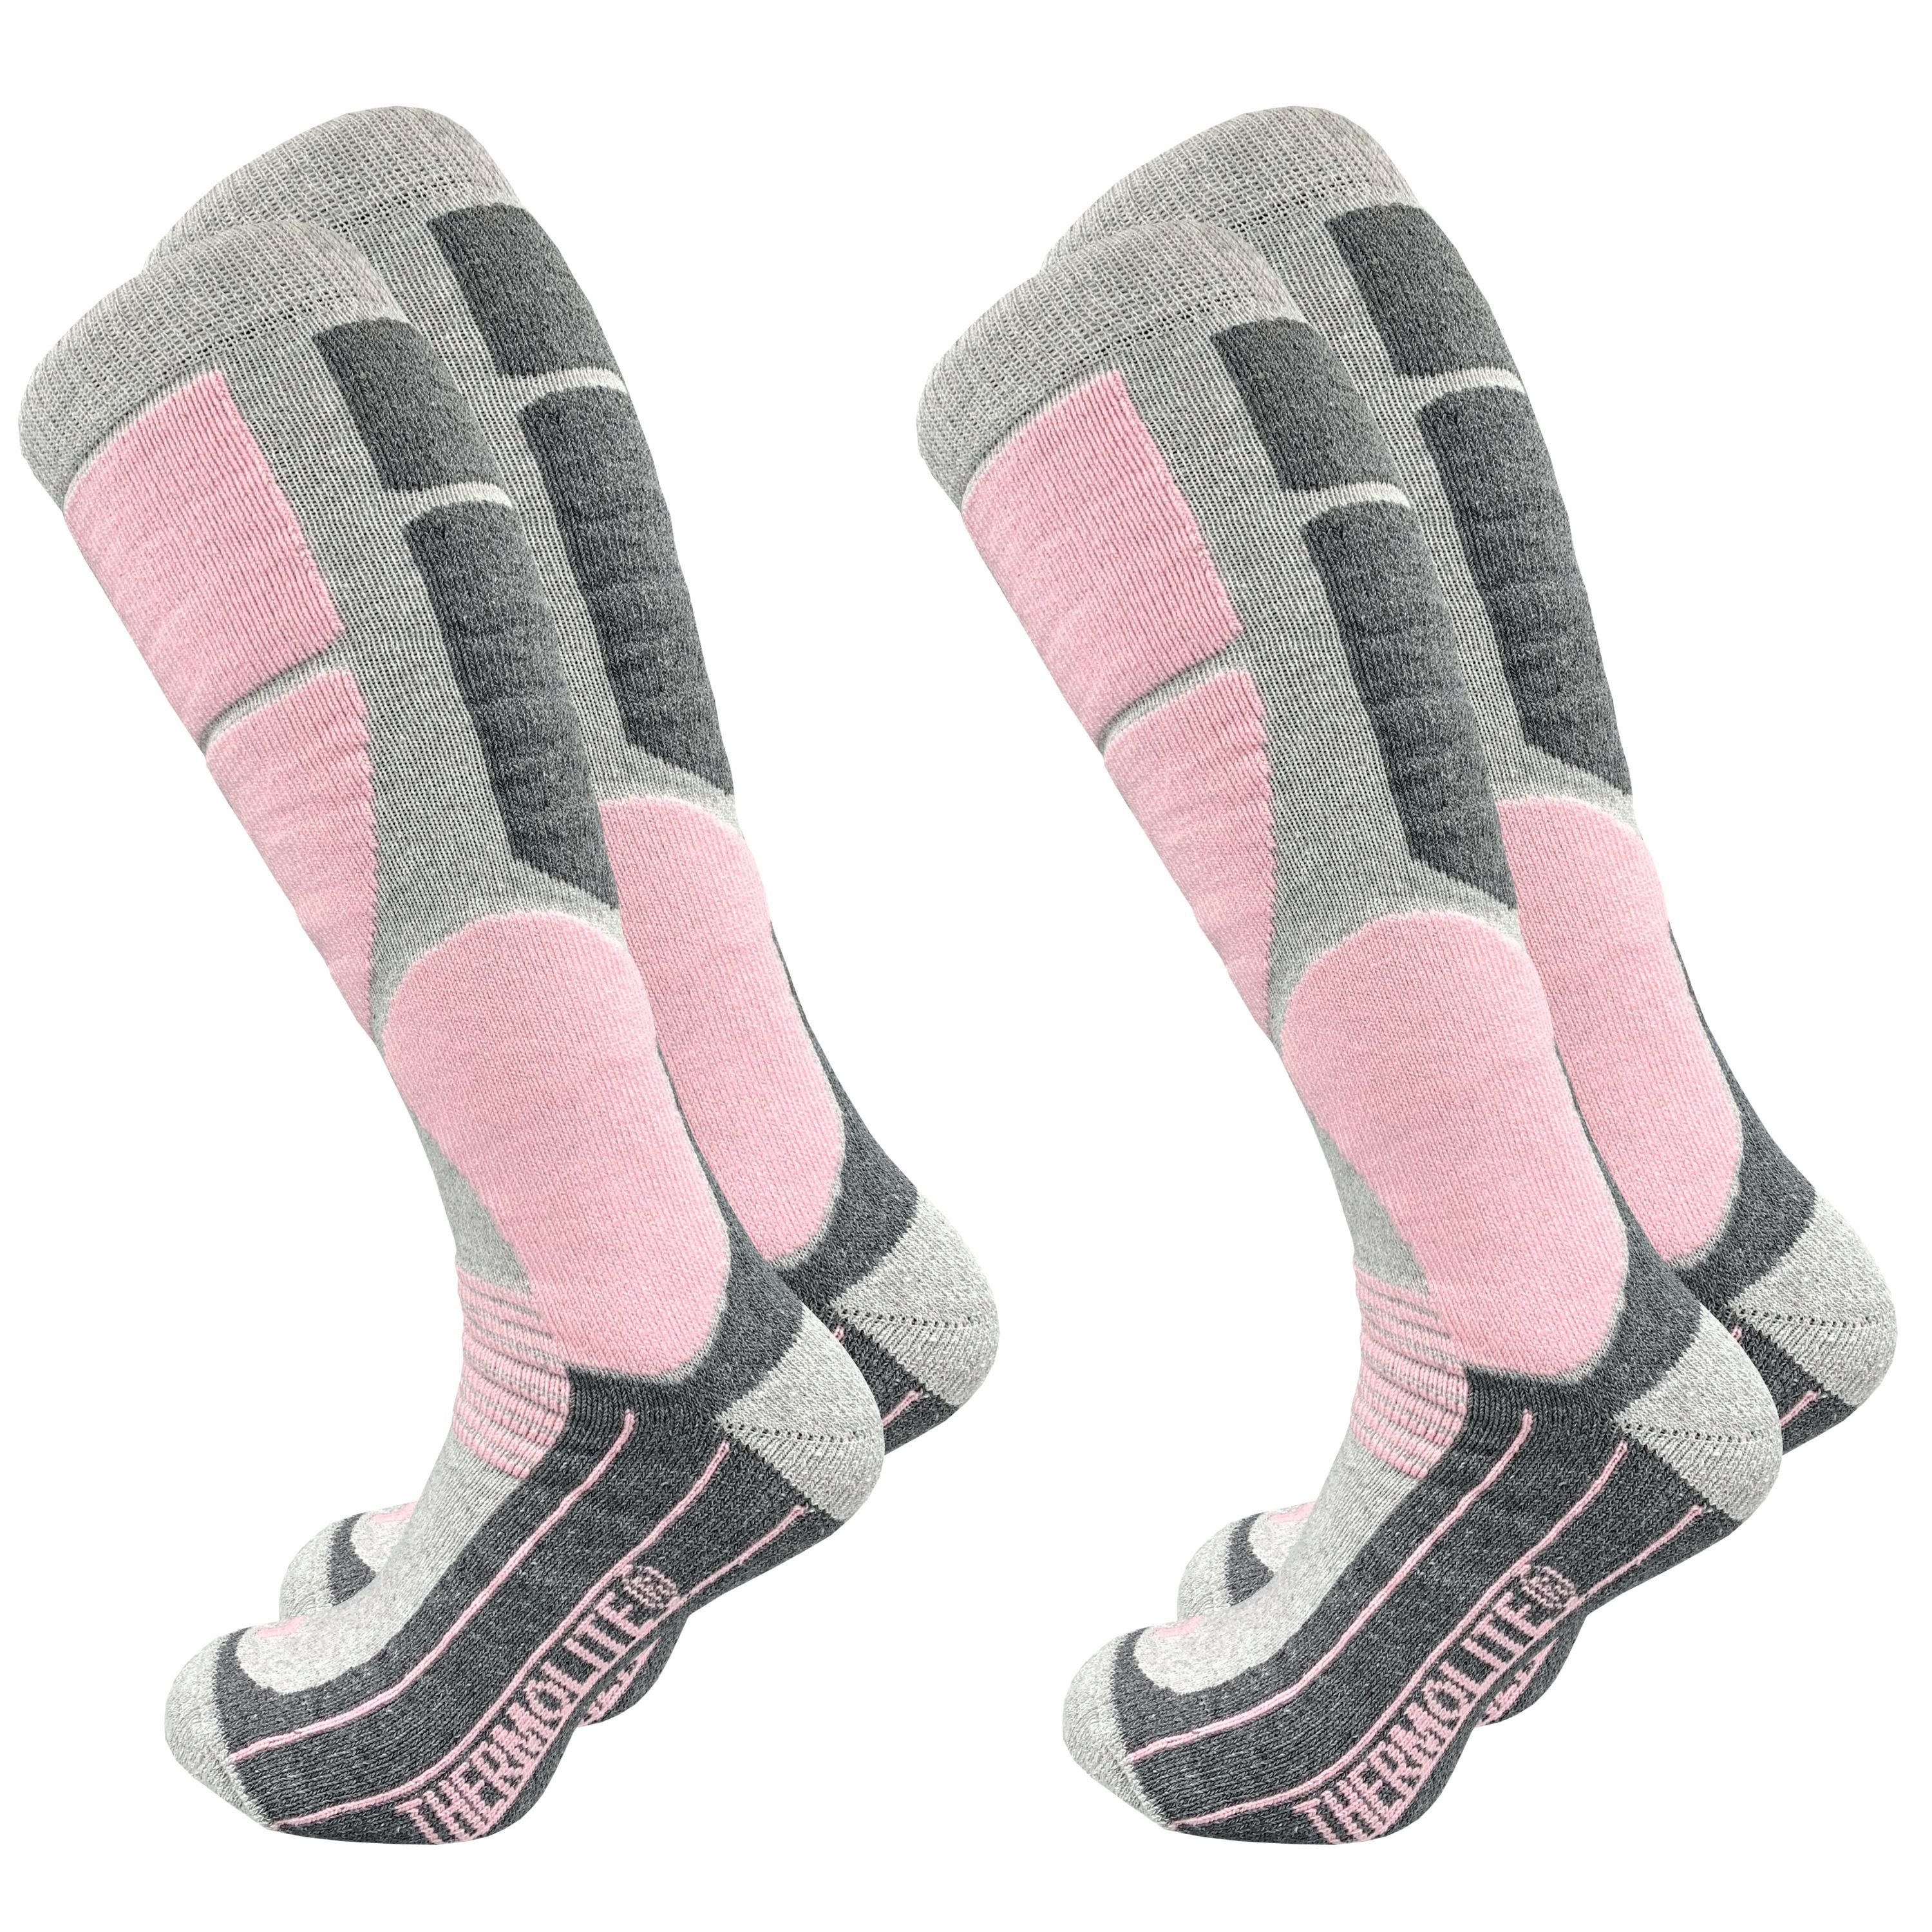 Rosa sportliche Socken kaufen » Pinke Sportsocken | OTTO